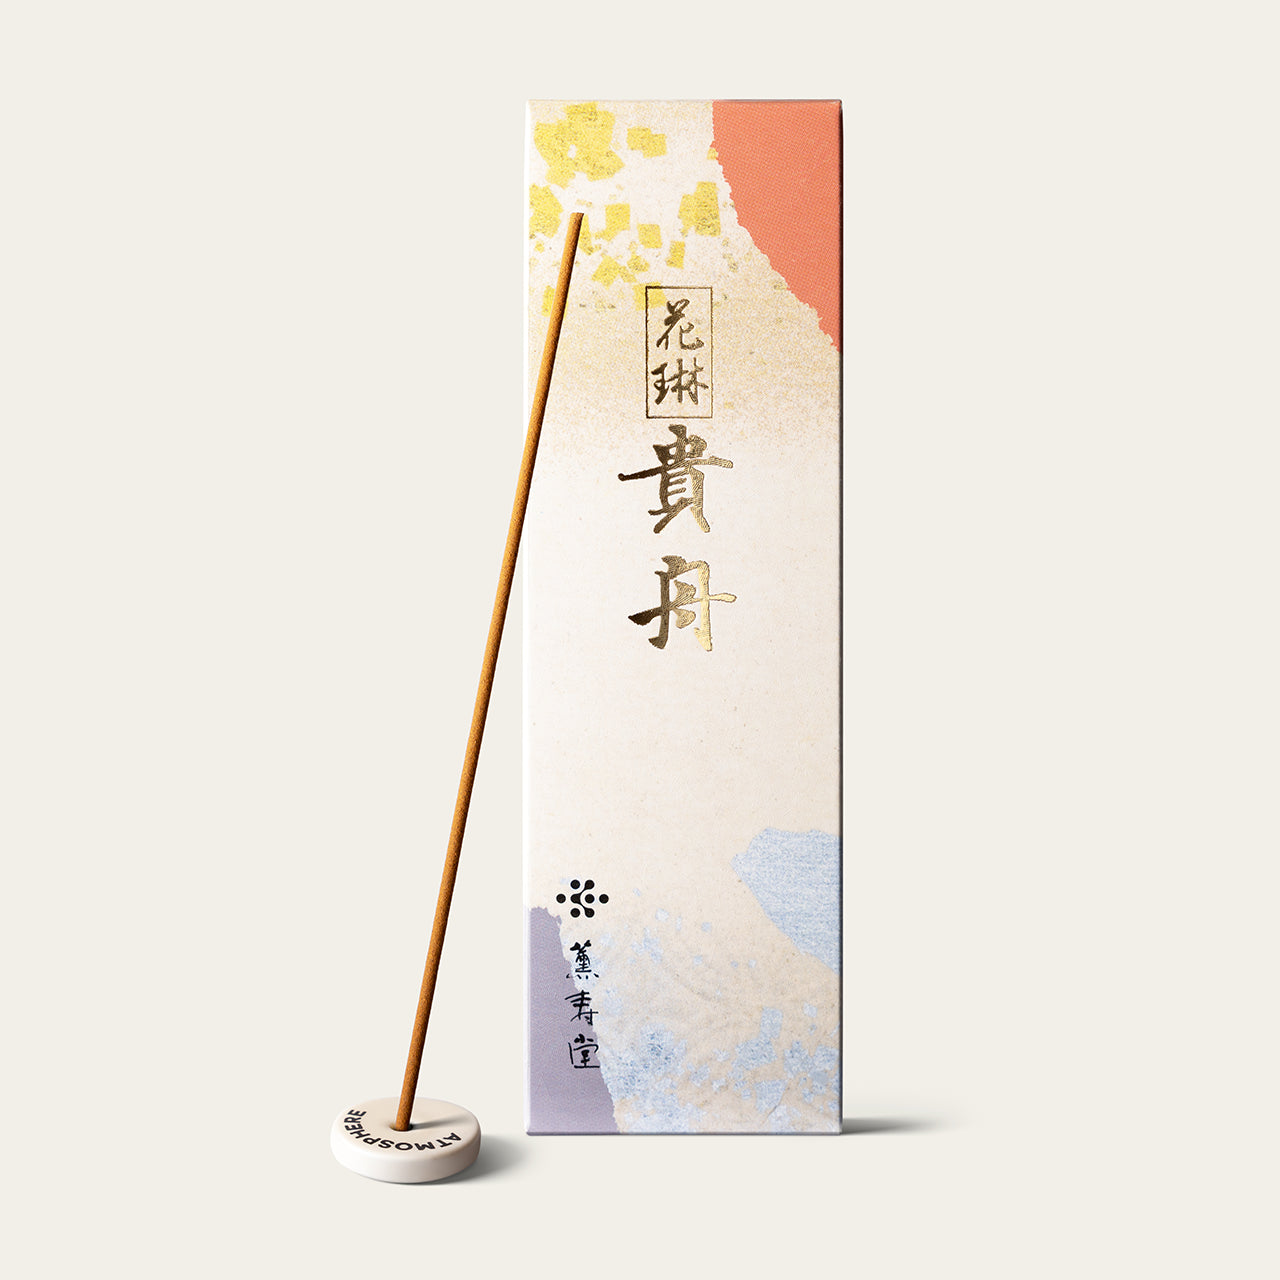 Kunjudo Royal Ship Karin Kifune Japanese incense sticks (80 sticks) with Atmosphere ceramic incense holder